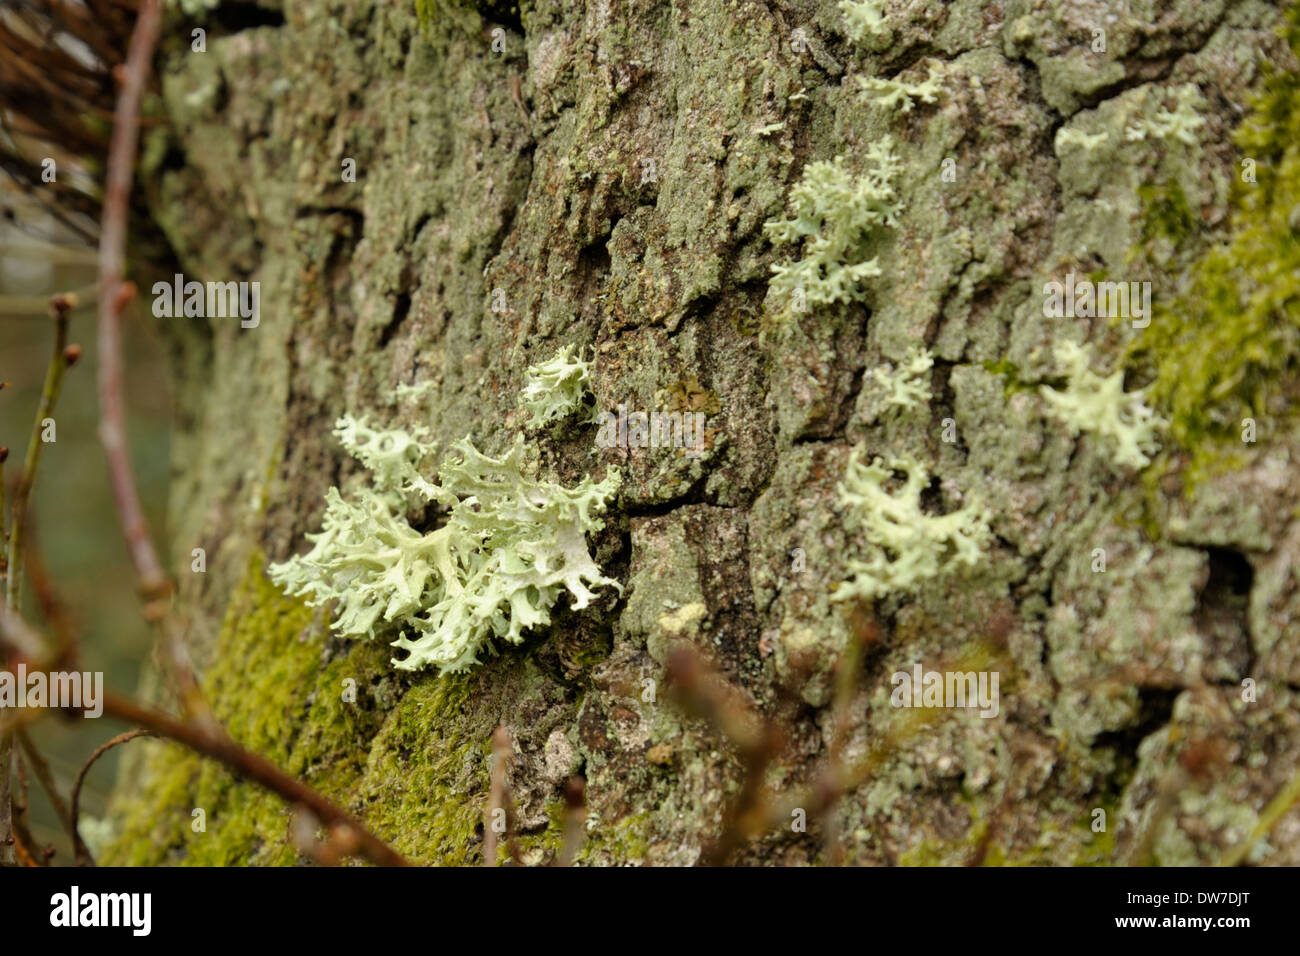 Oakmoss Lichen, Evernia prunastri on a tree trunk Stock Photo